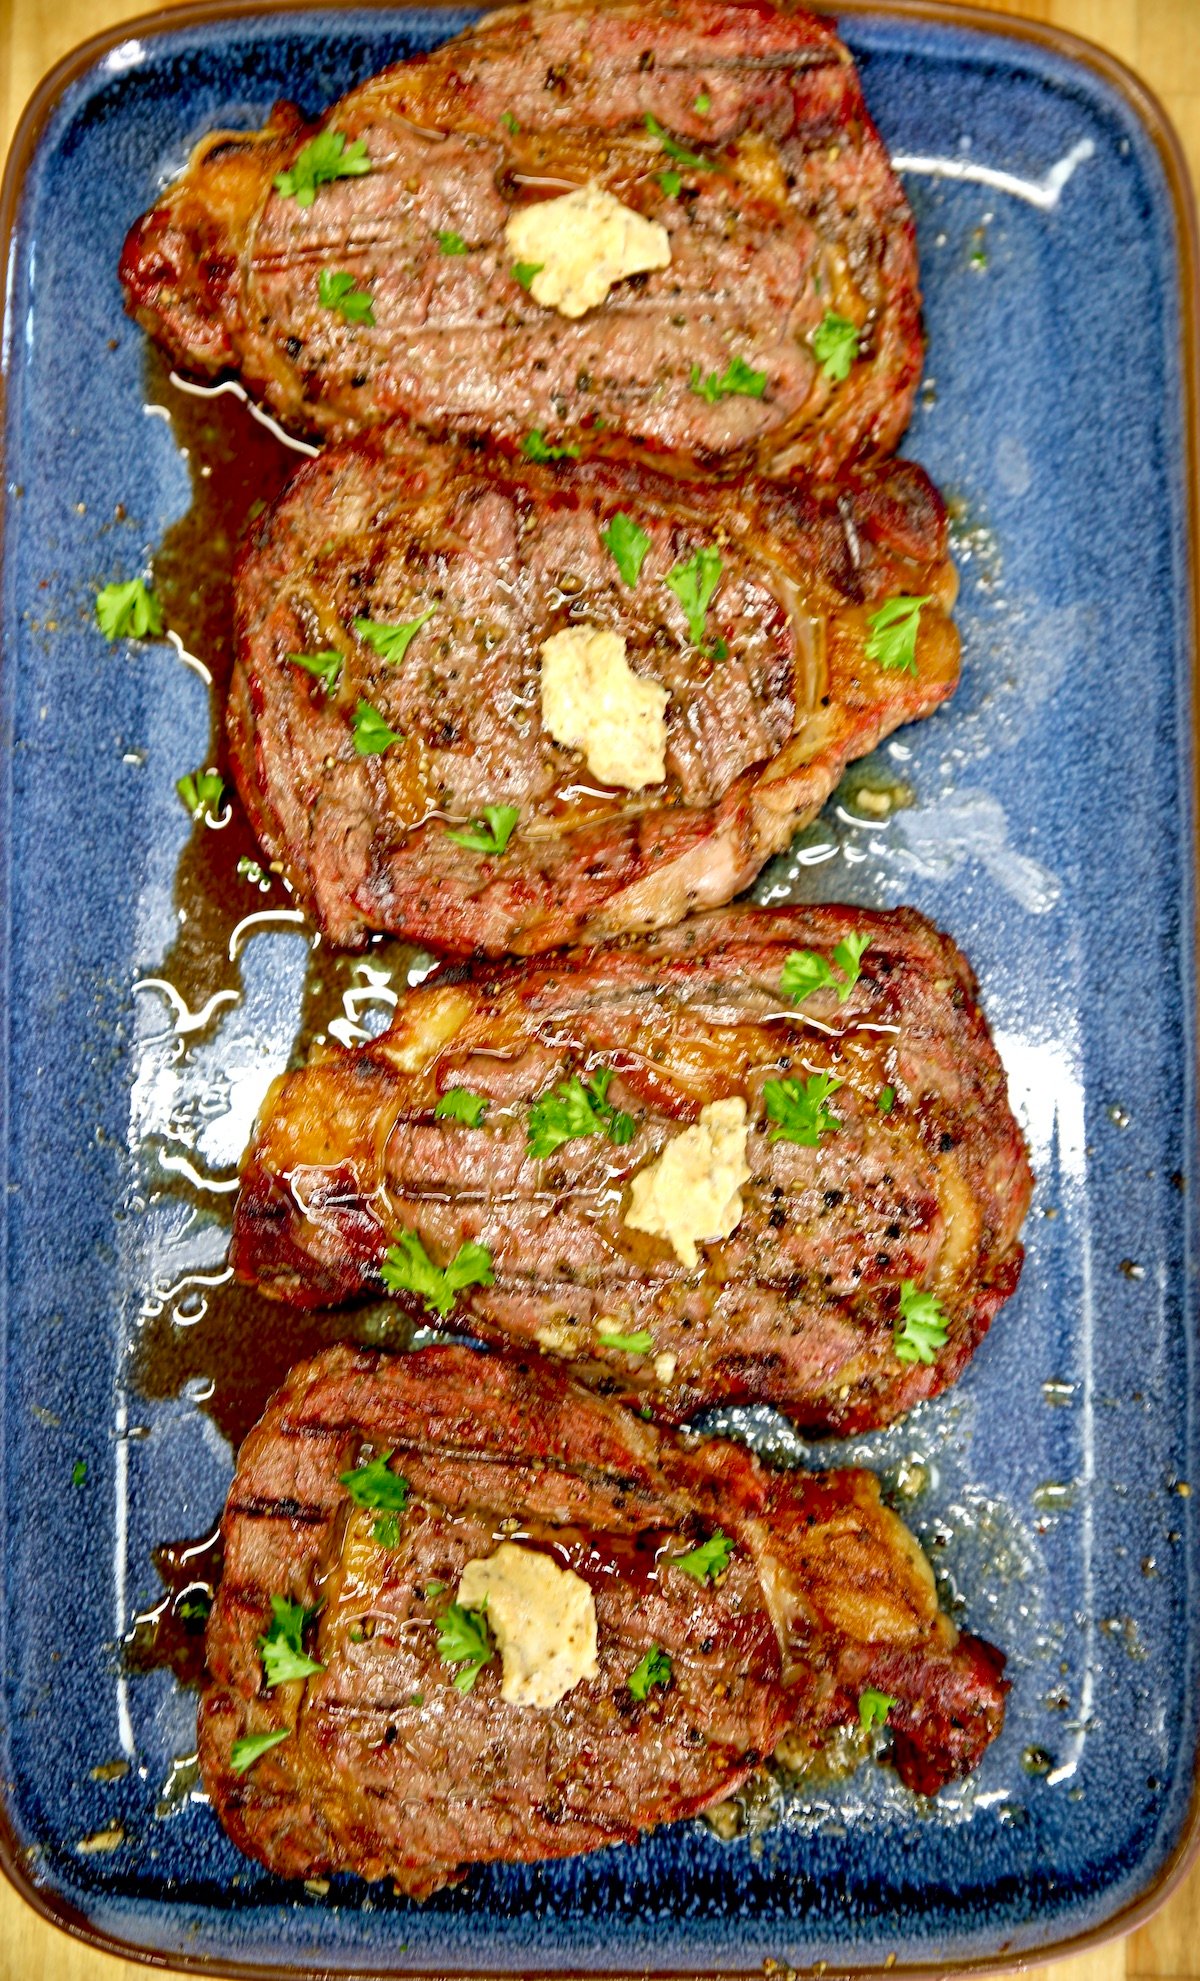 4 Ribeye steaks with garlic butter.